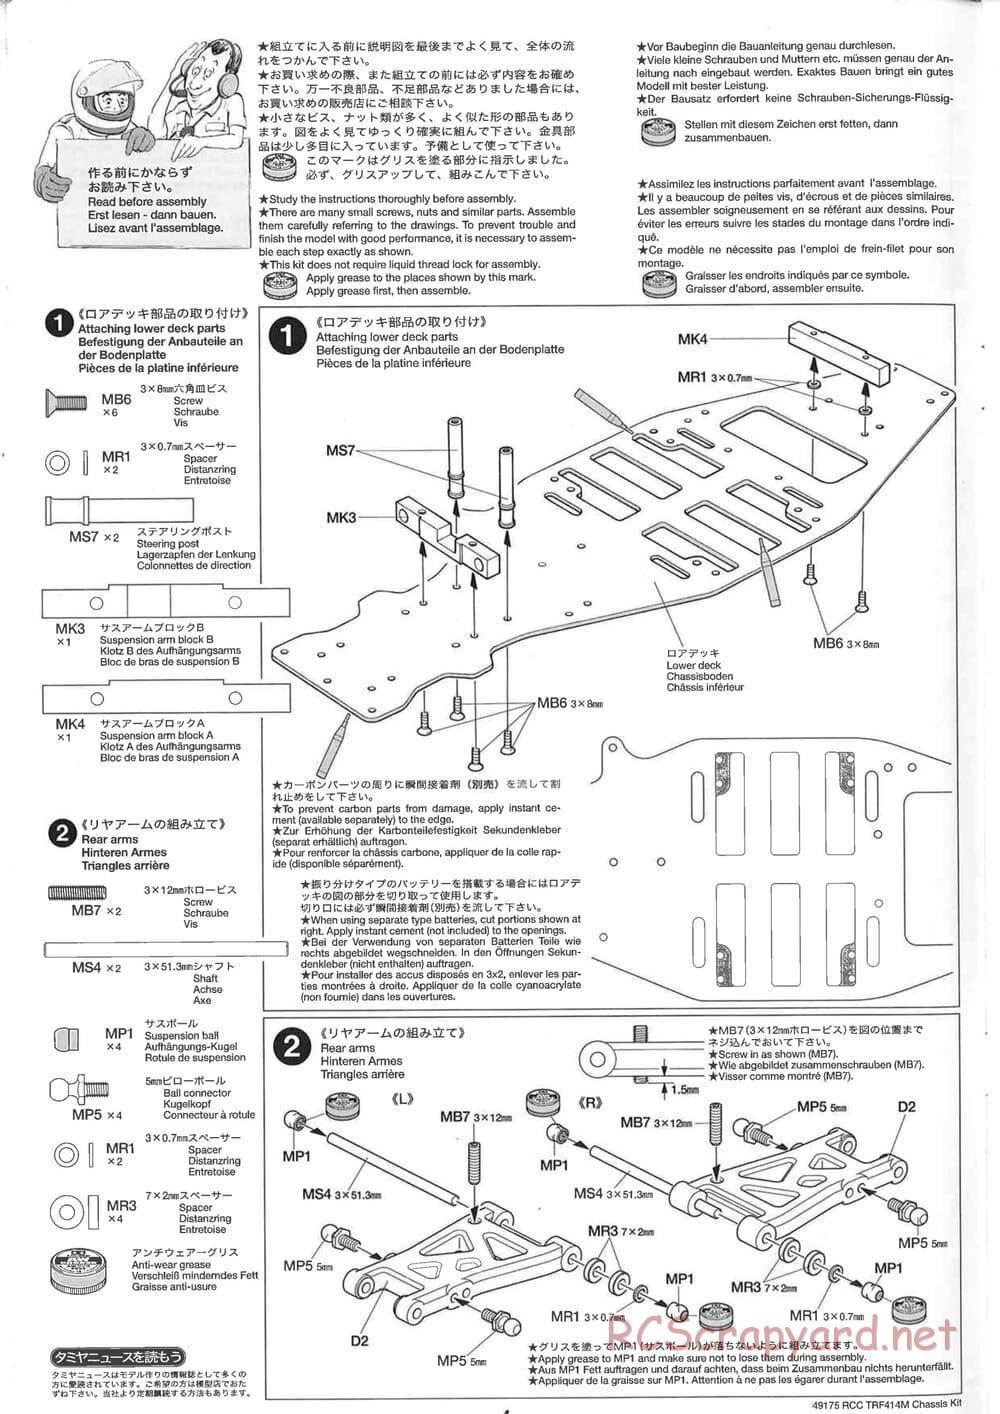 Tamiya - TRF414M Chassis - Manual - Page 4